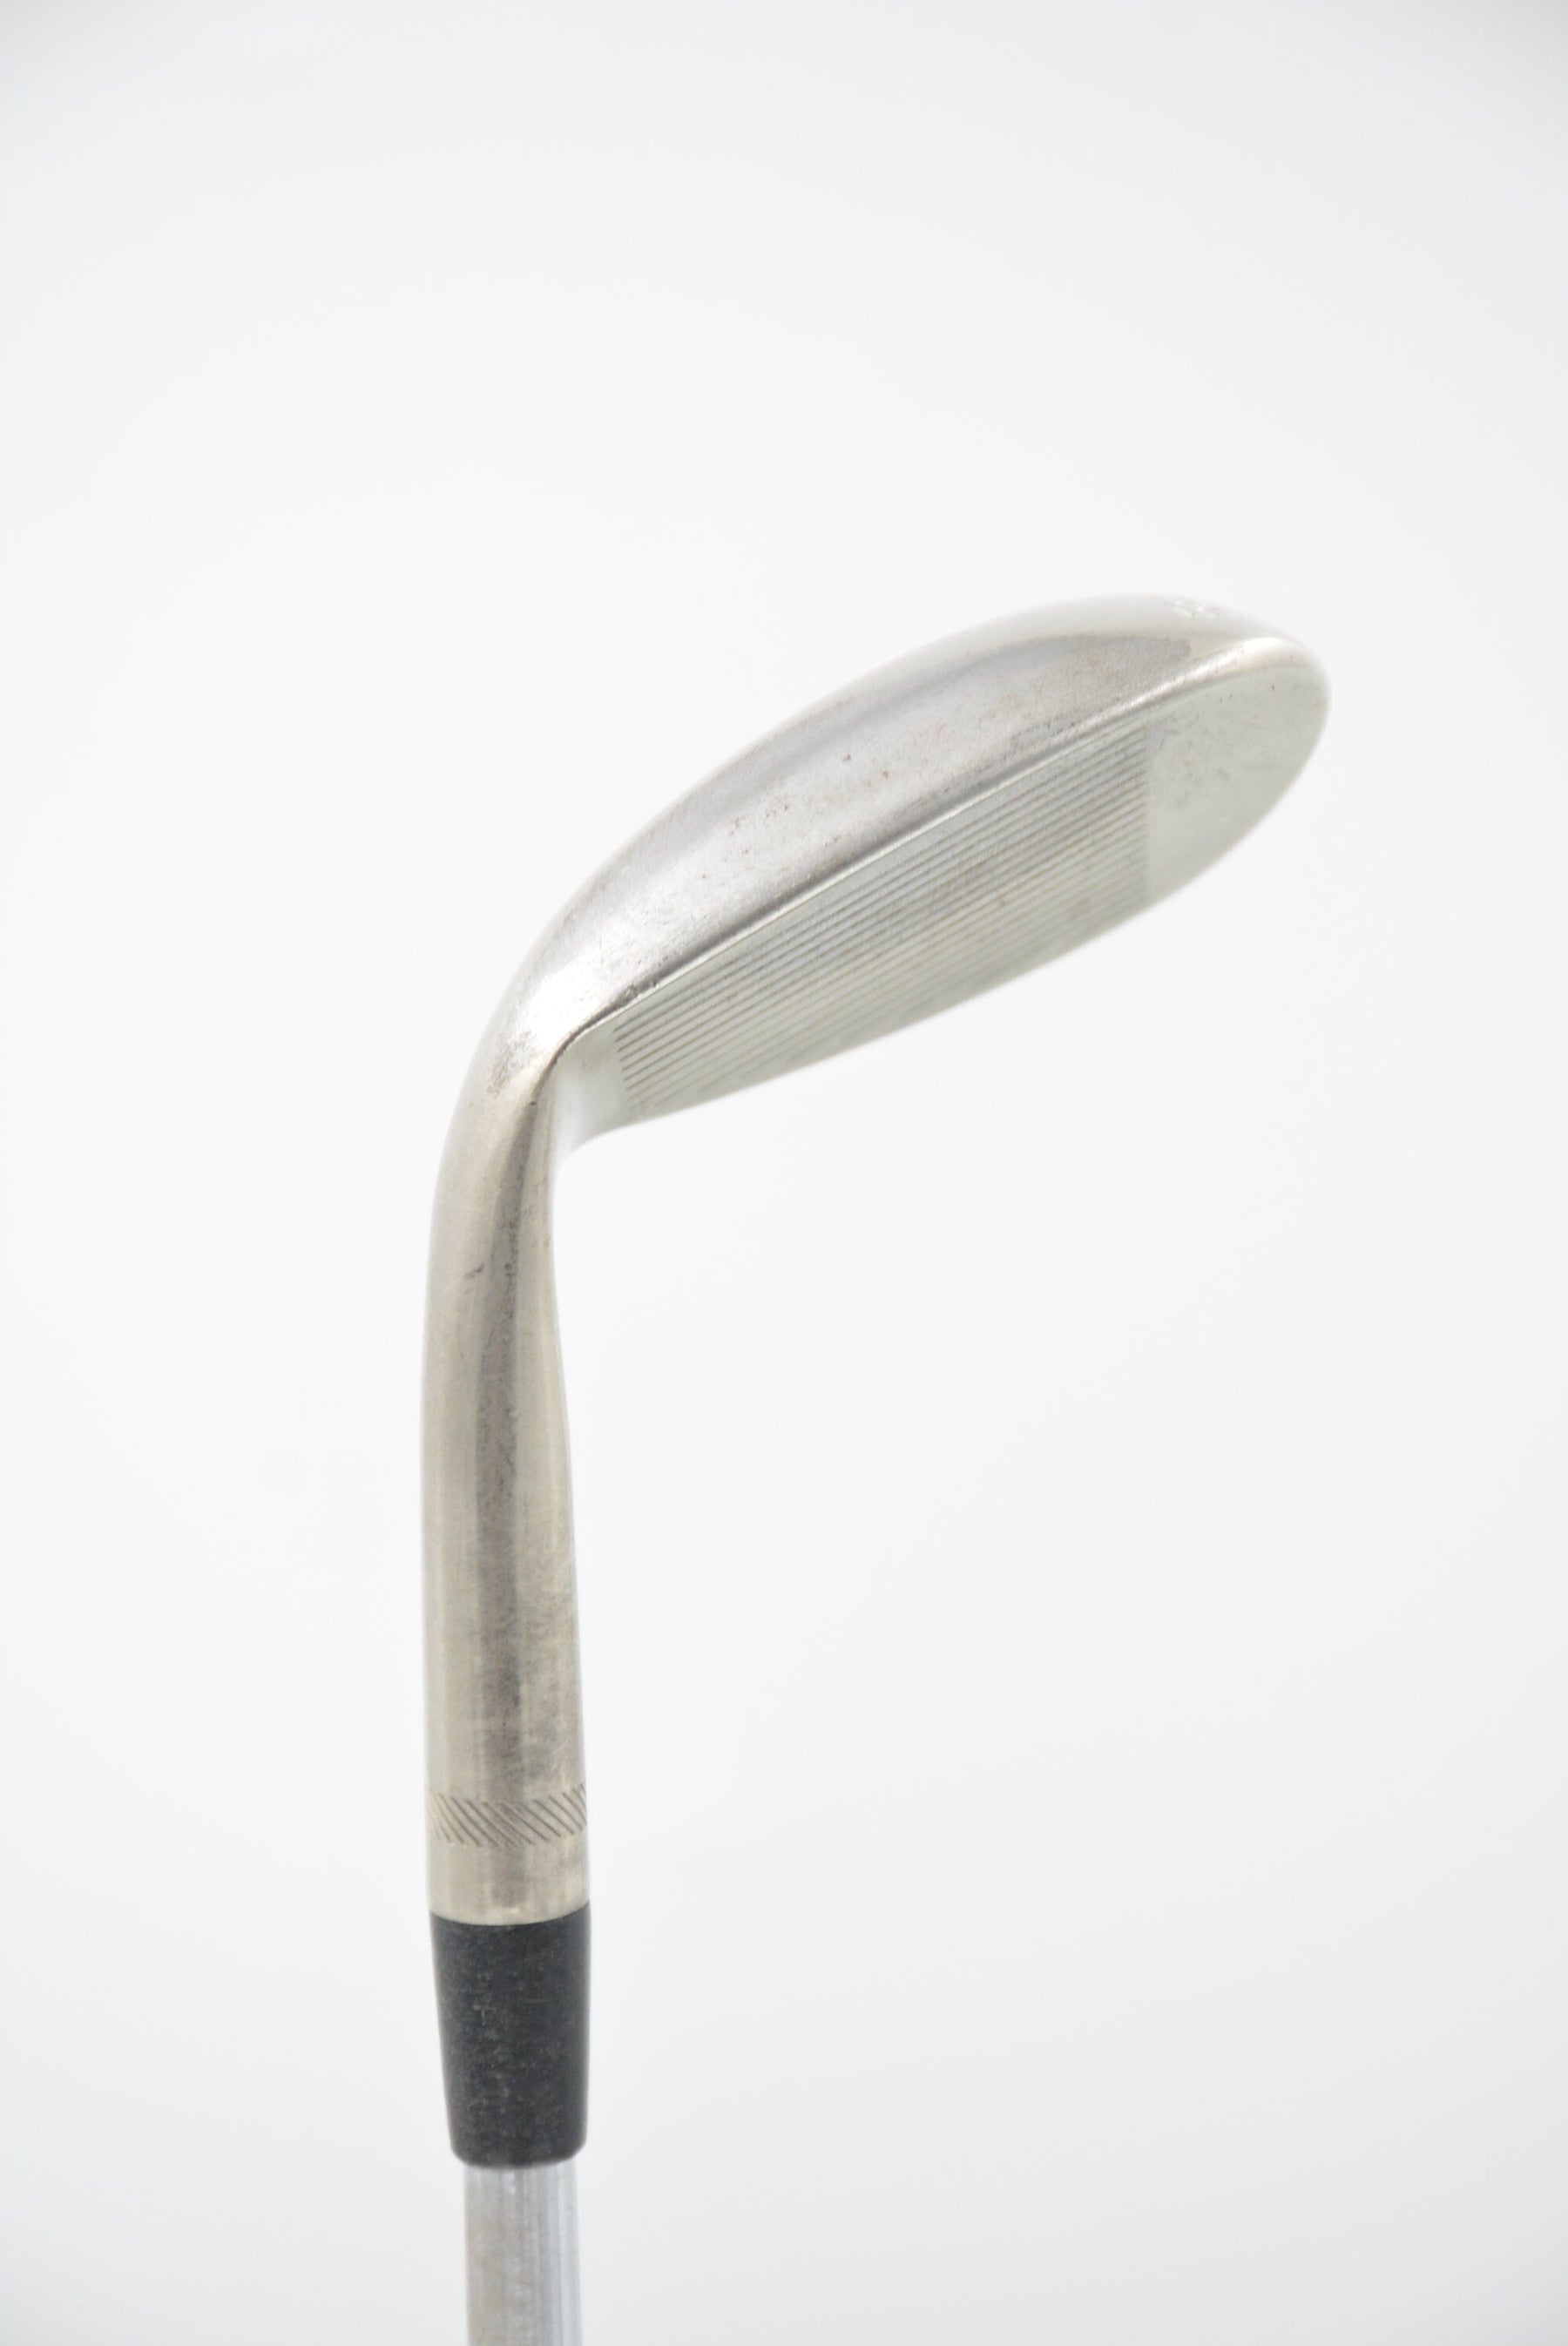 Titleist Vokey SM7 Brushed Steel K Grind 58 Degree Wedge Wedge Flex Golf Clubs GolfRoots 